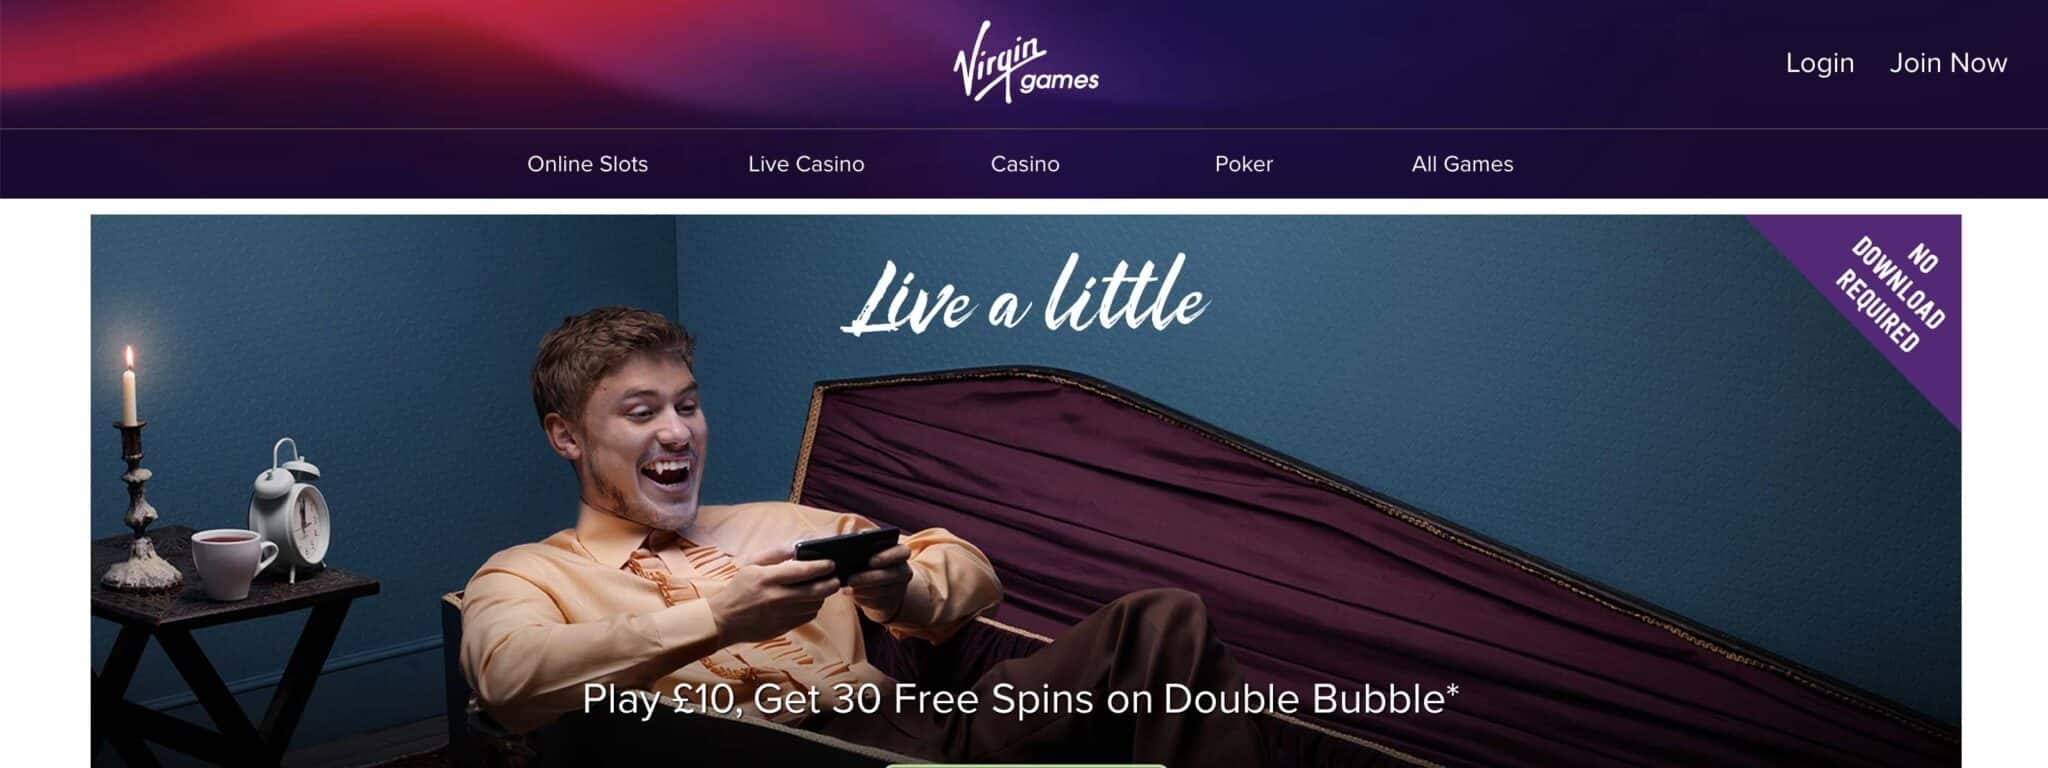 Virgin Slots Casino For Free